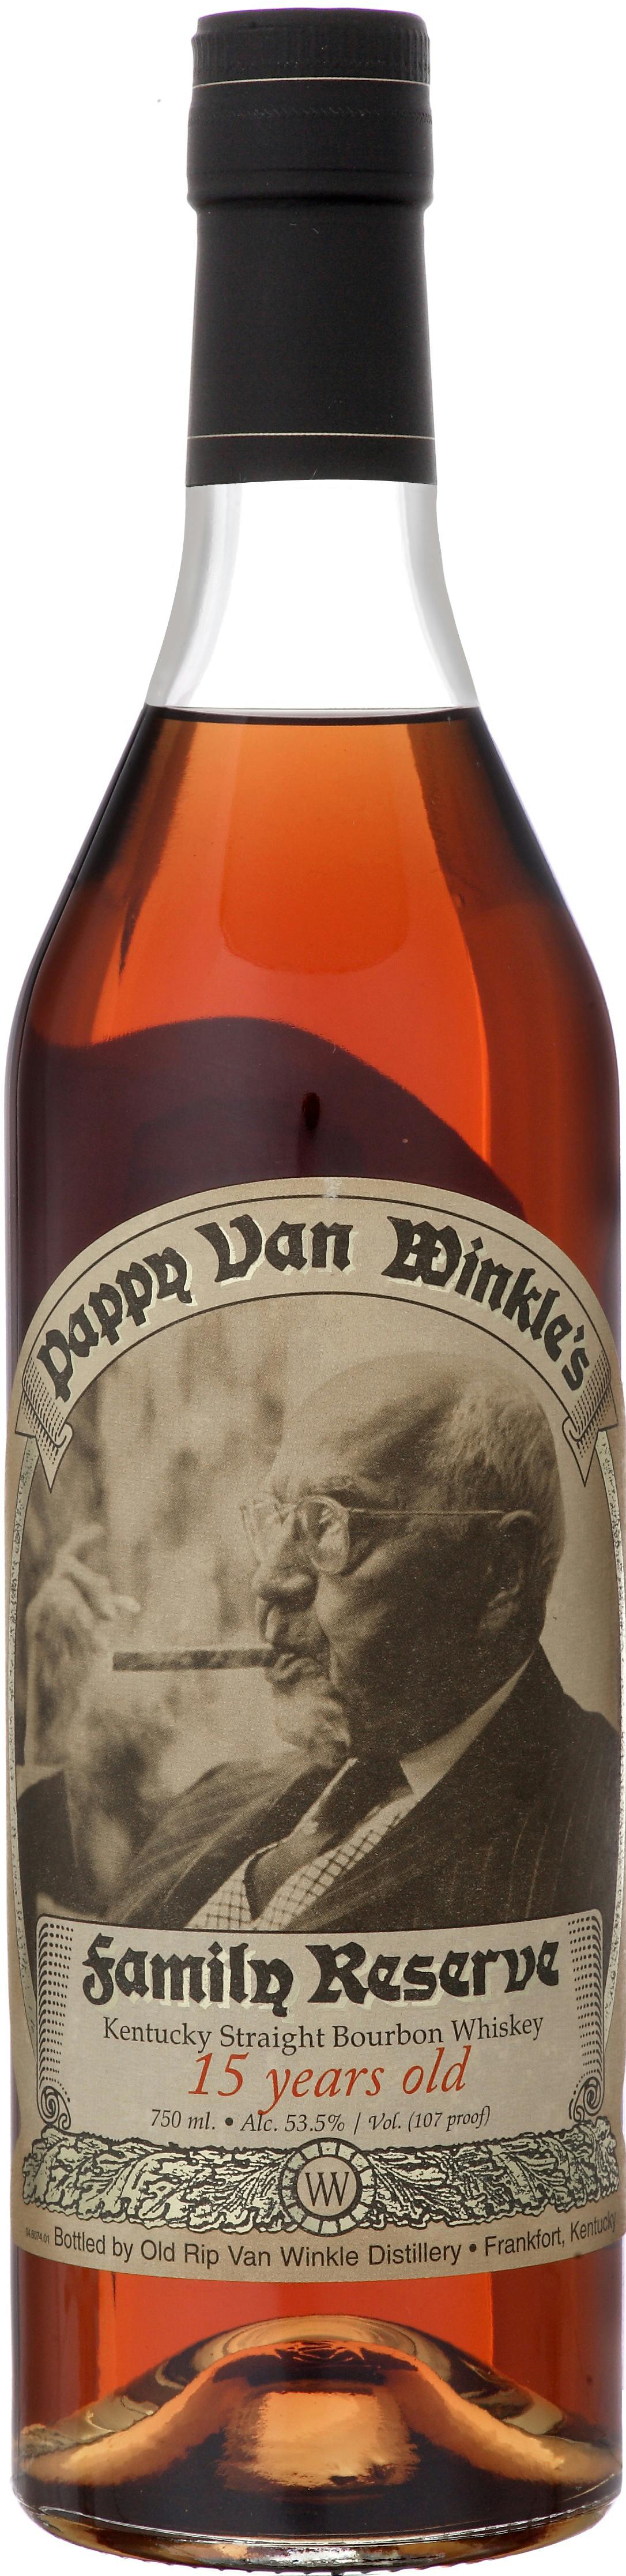 Old Rip Van Winkle Distillery Pappy Van Winkle S Family Reserve Bourbon 15 Year Old Star Liquor Wine